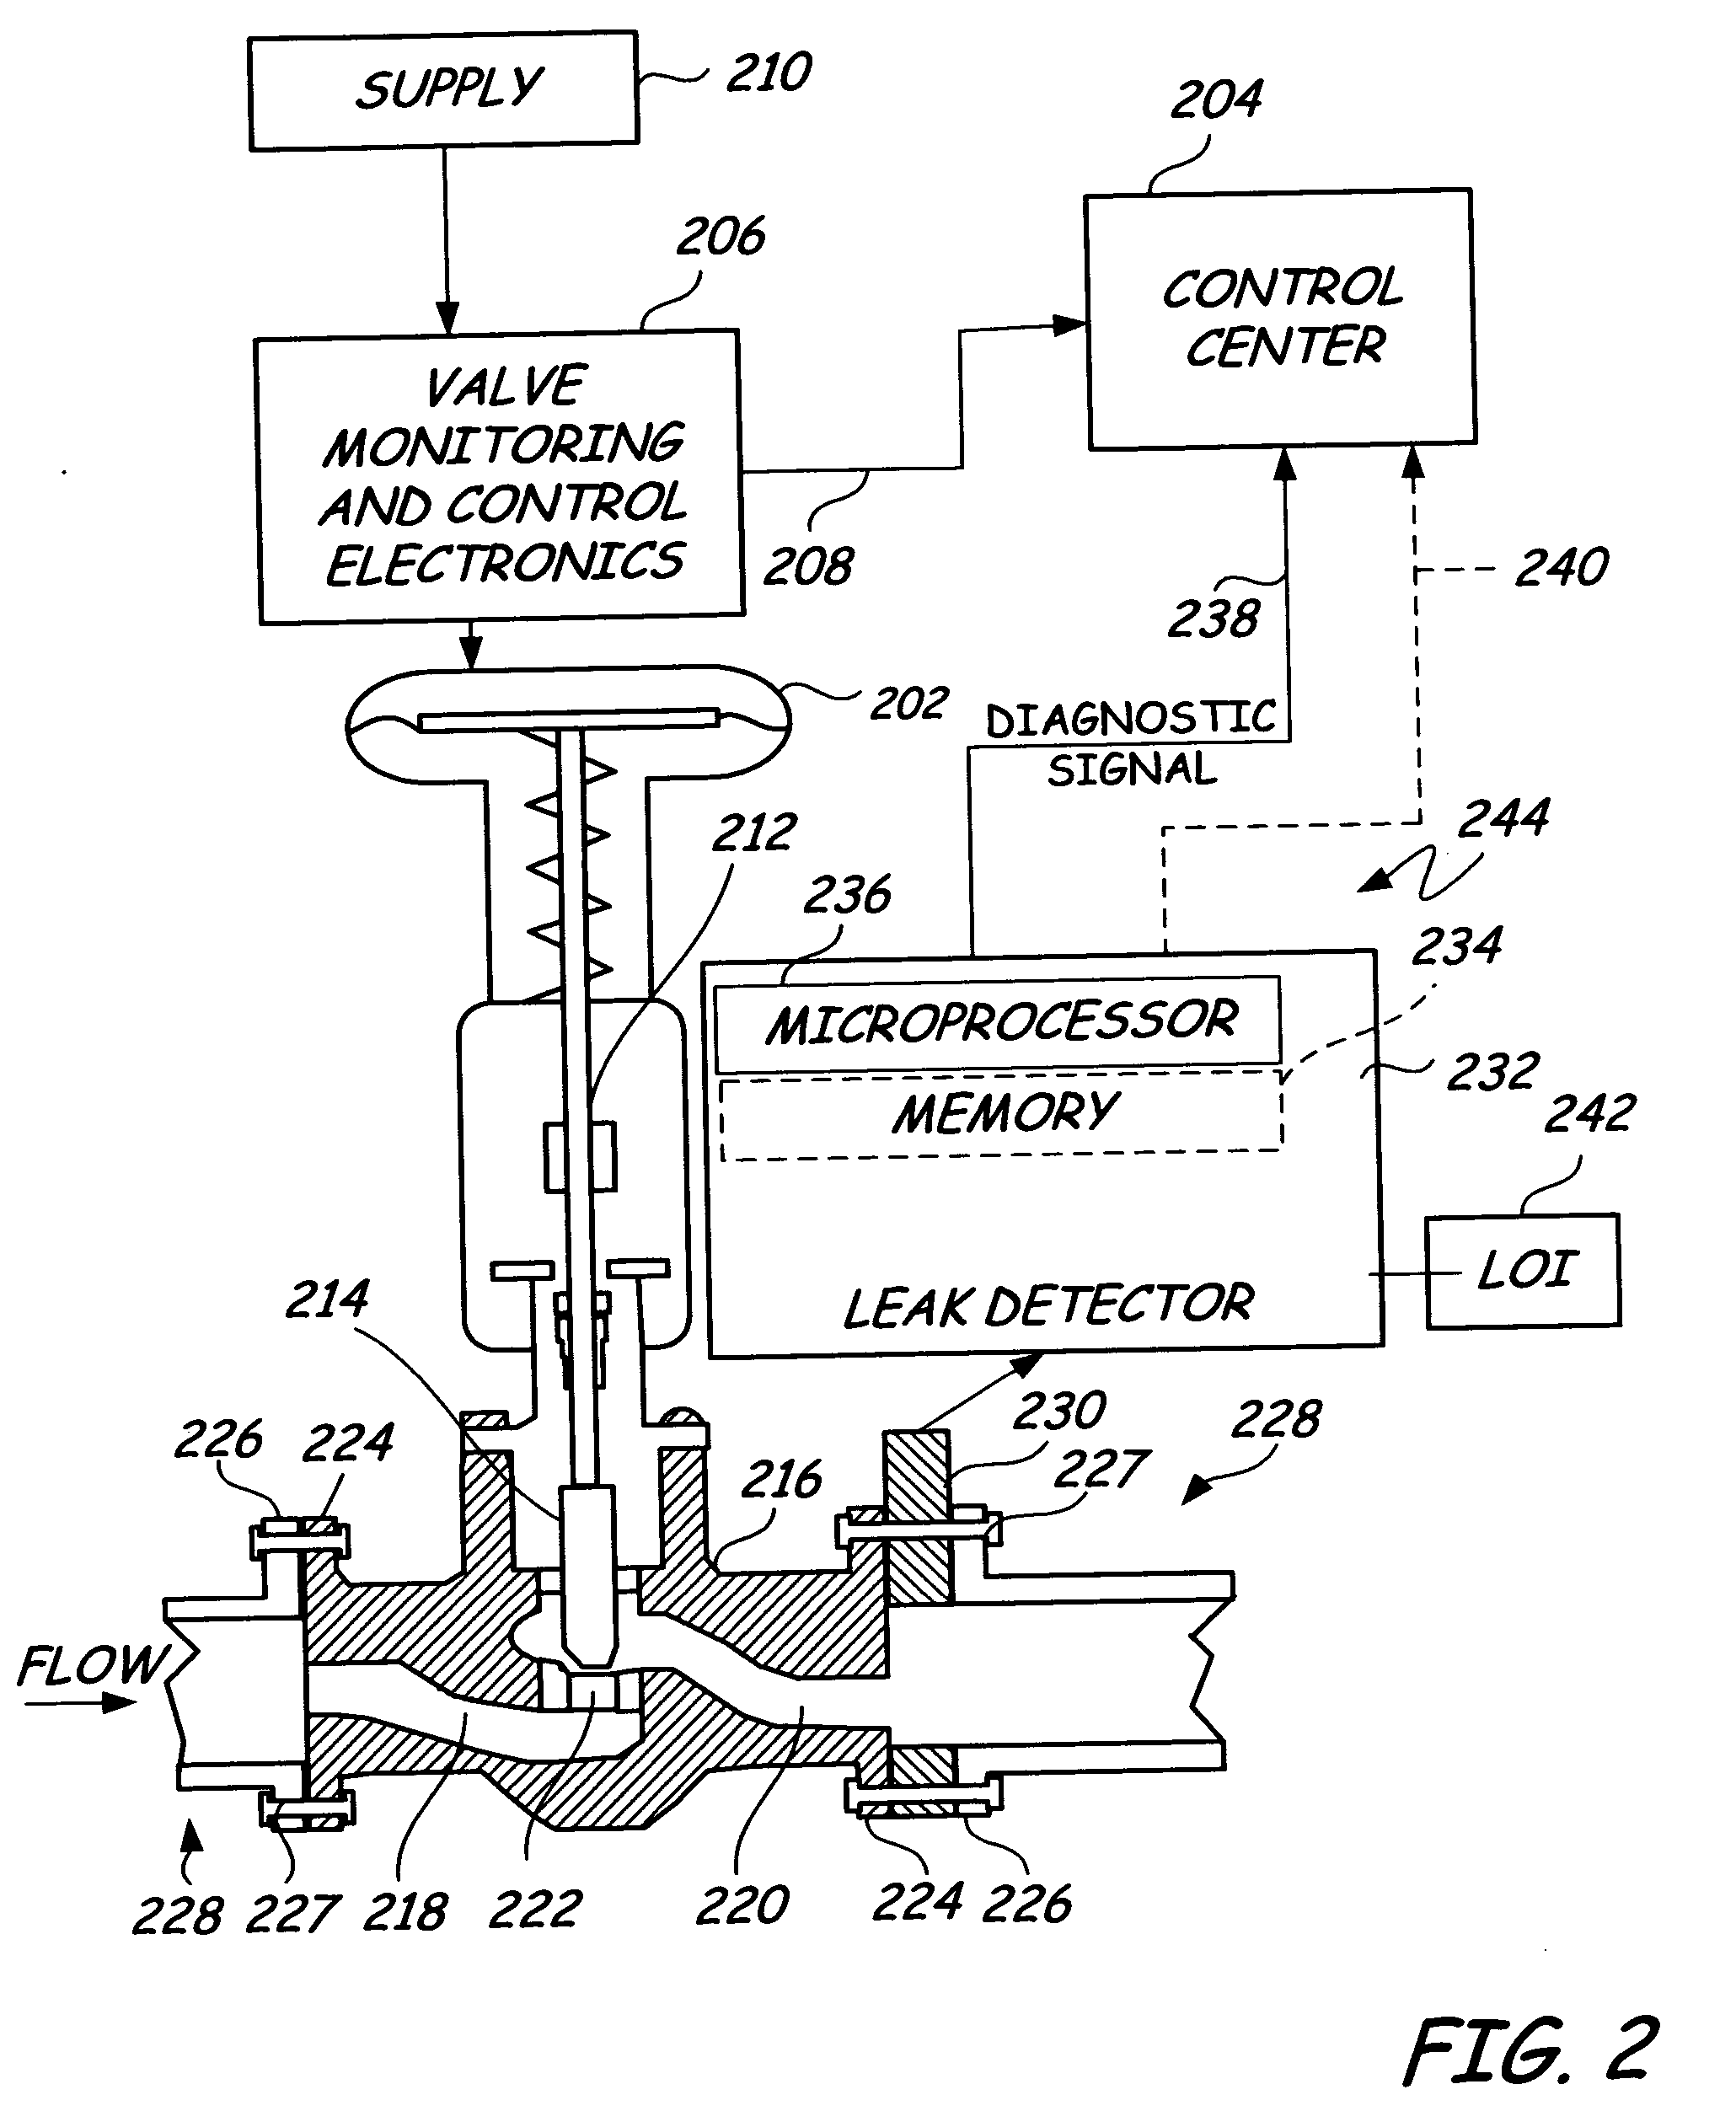 Leak detector for process valve